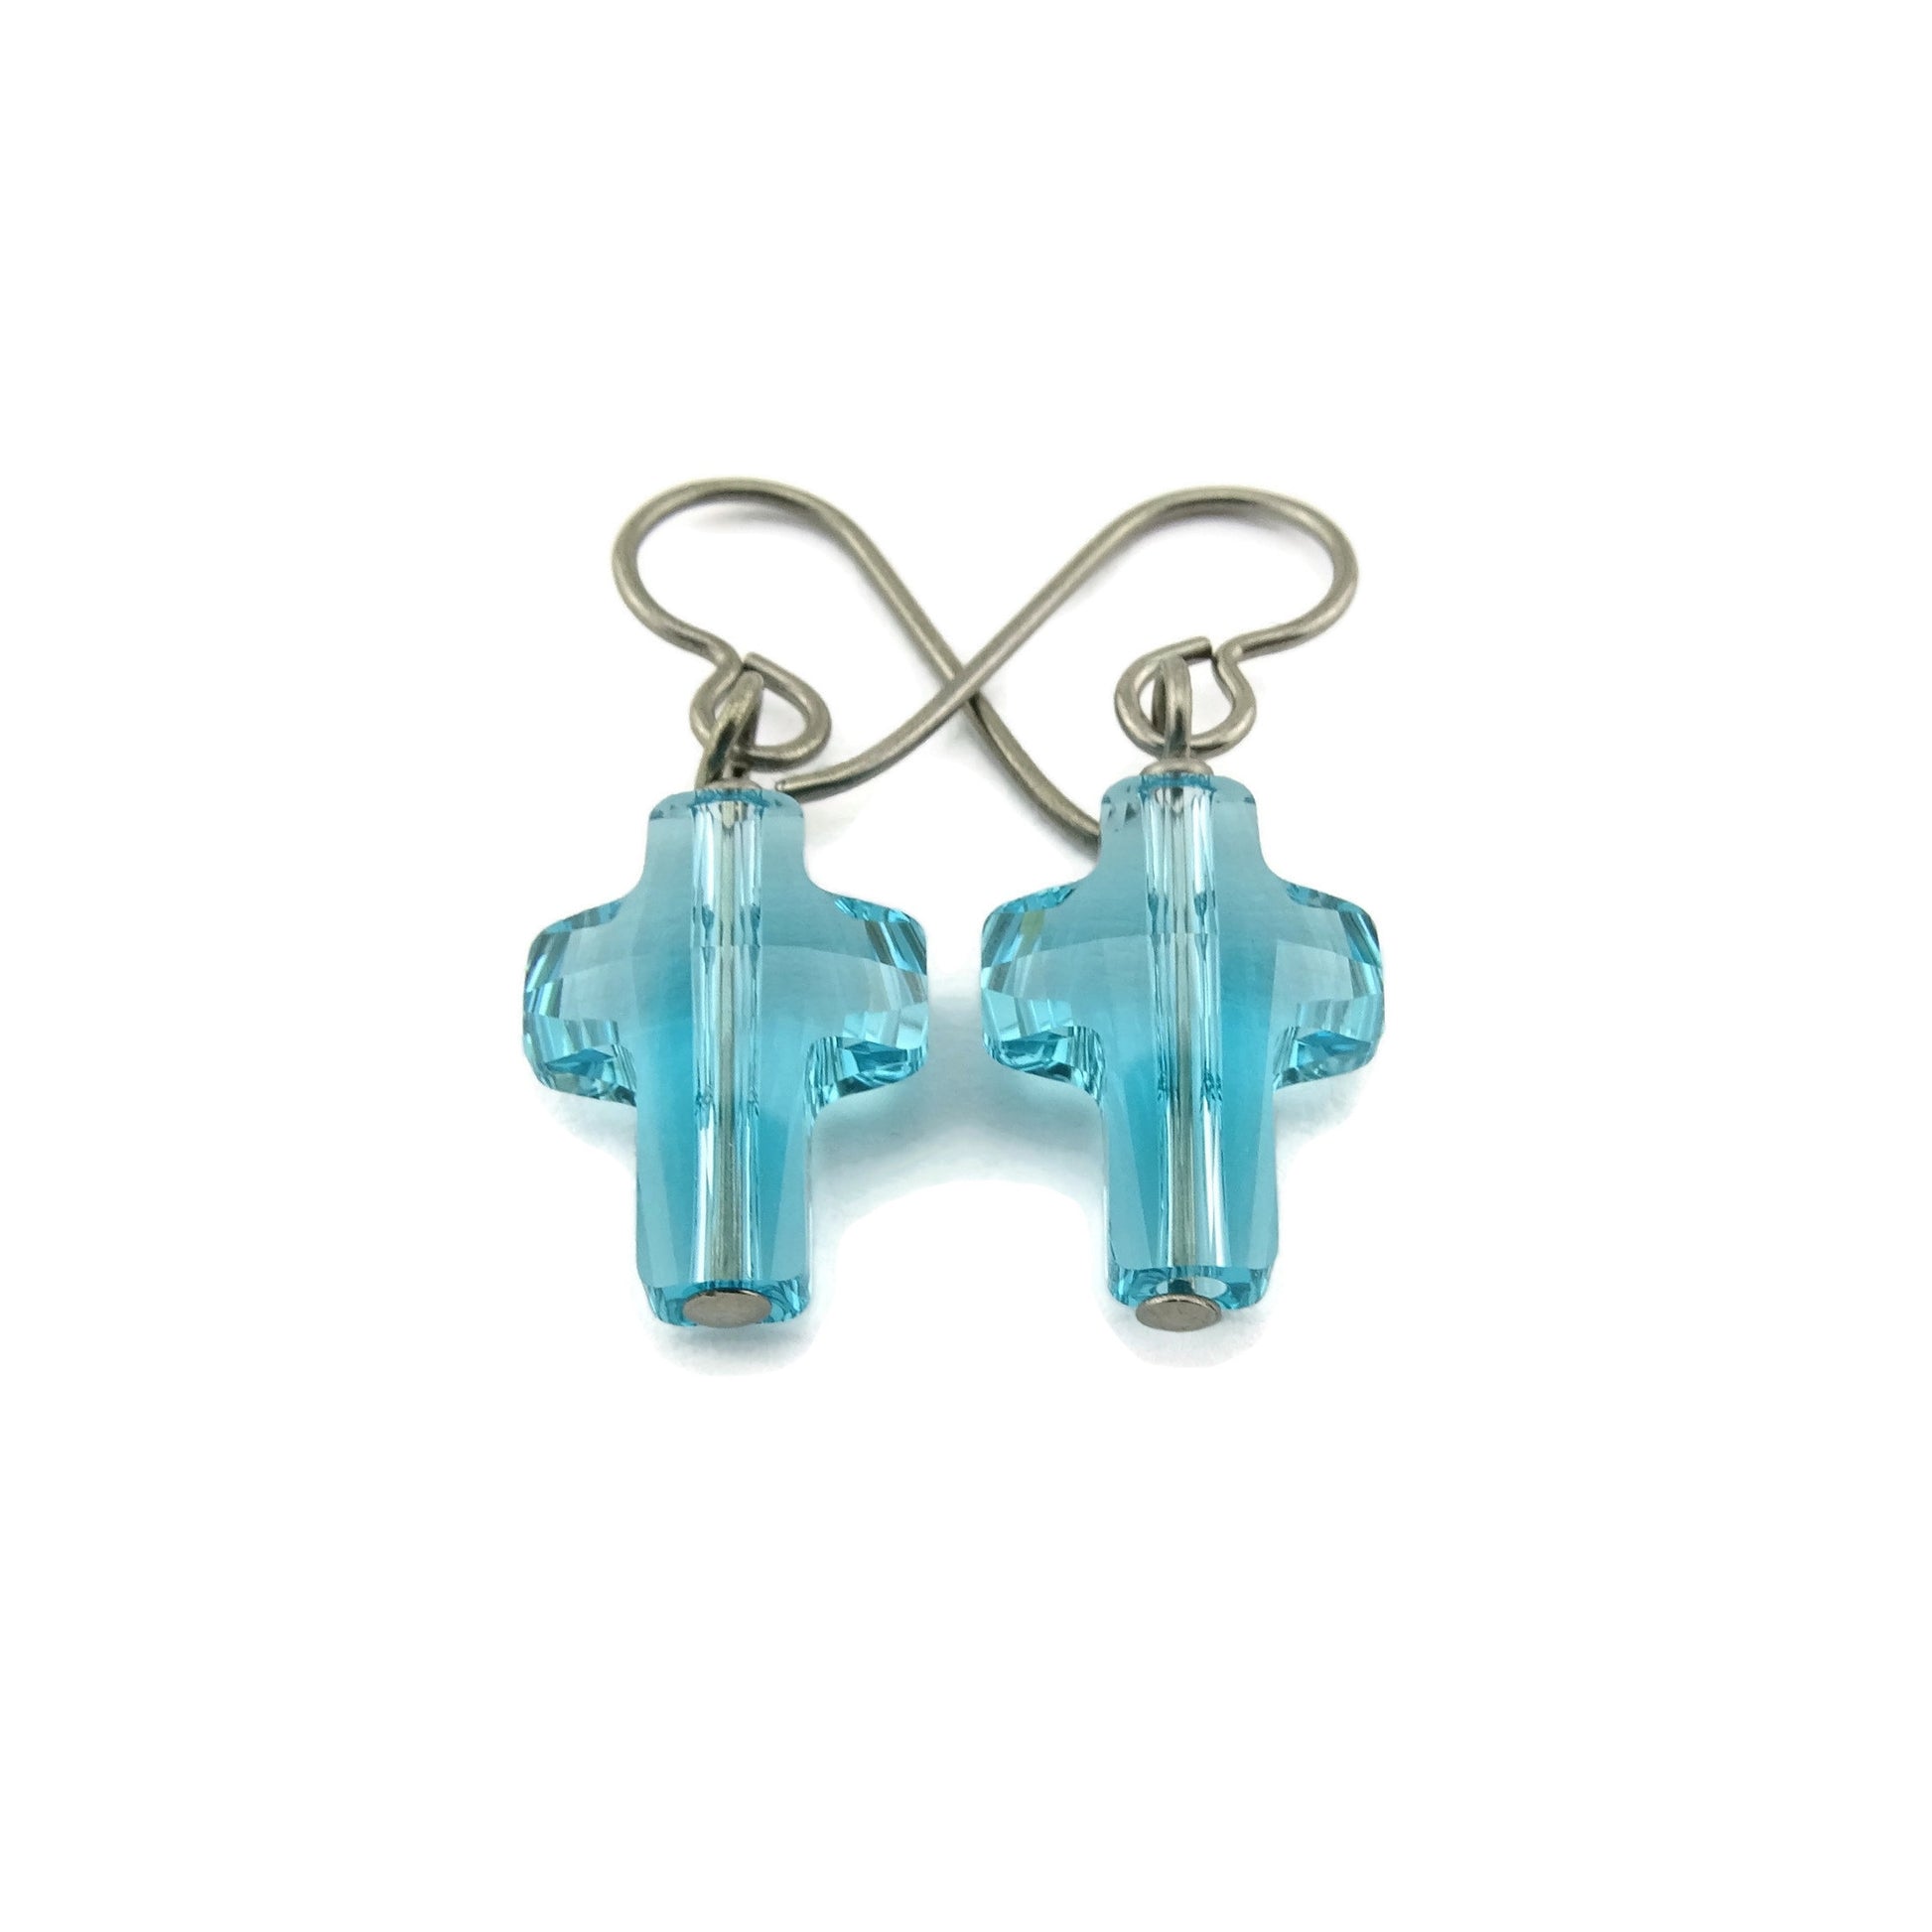 Aqua Blue Cross Titanium Earrings, Light Turquoise Swarovski Crystal Niobium Earrings Nickel Free Hypoallergenic Earrings for Sensitive Ears